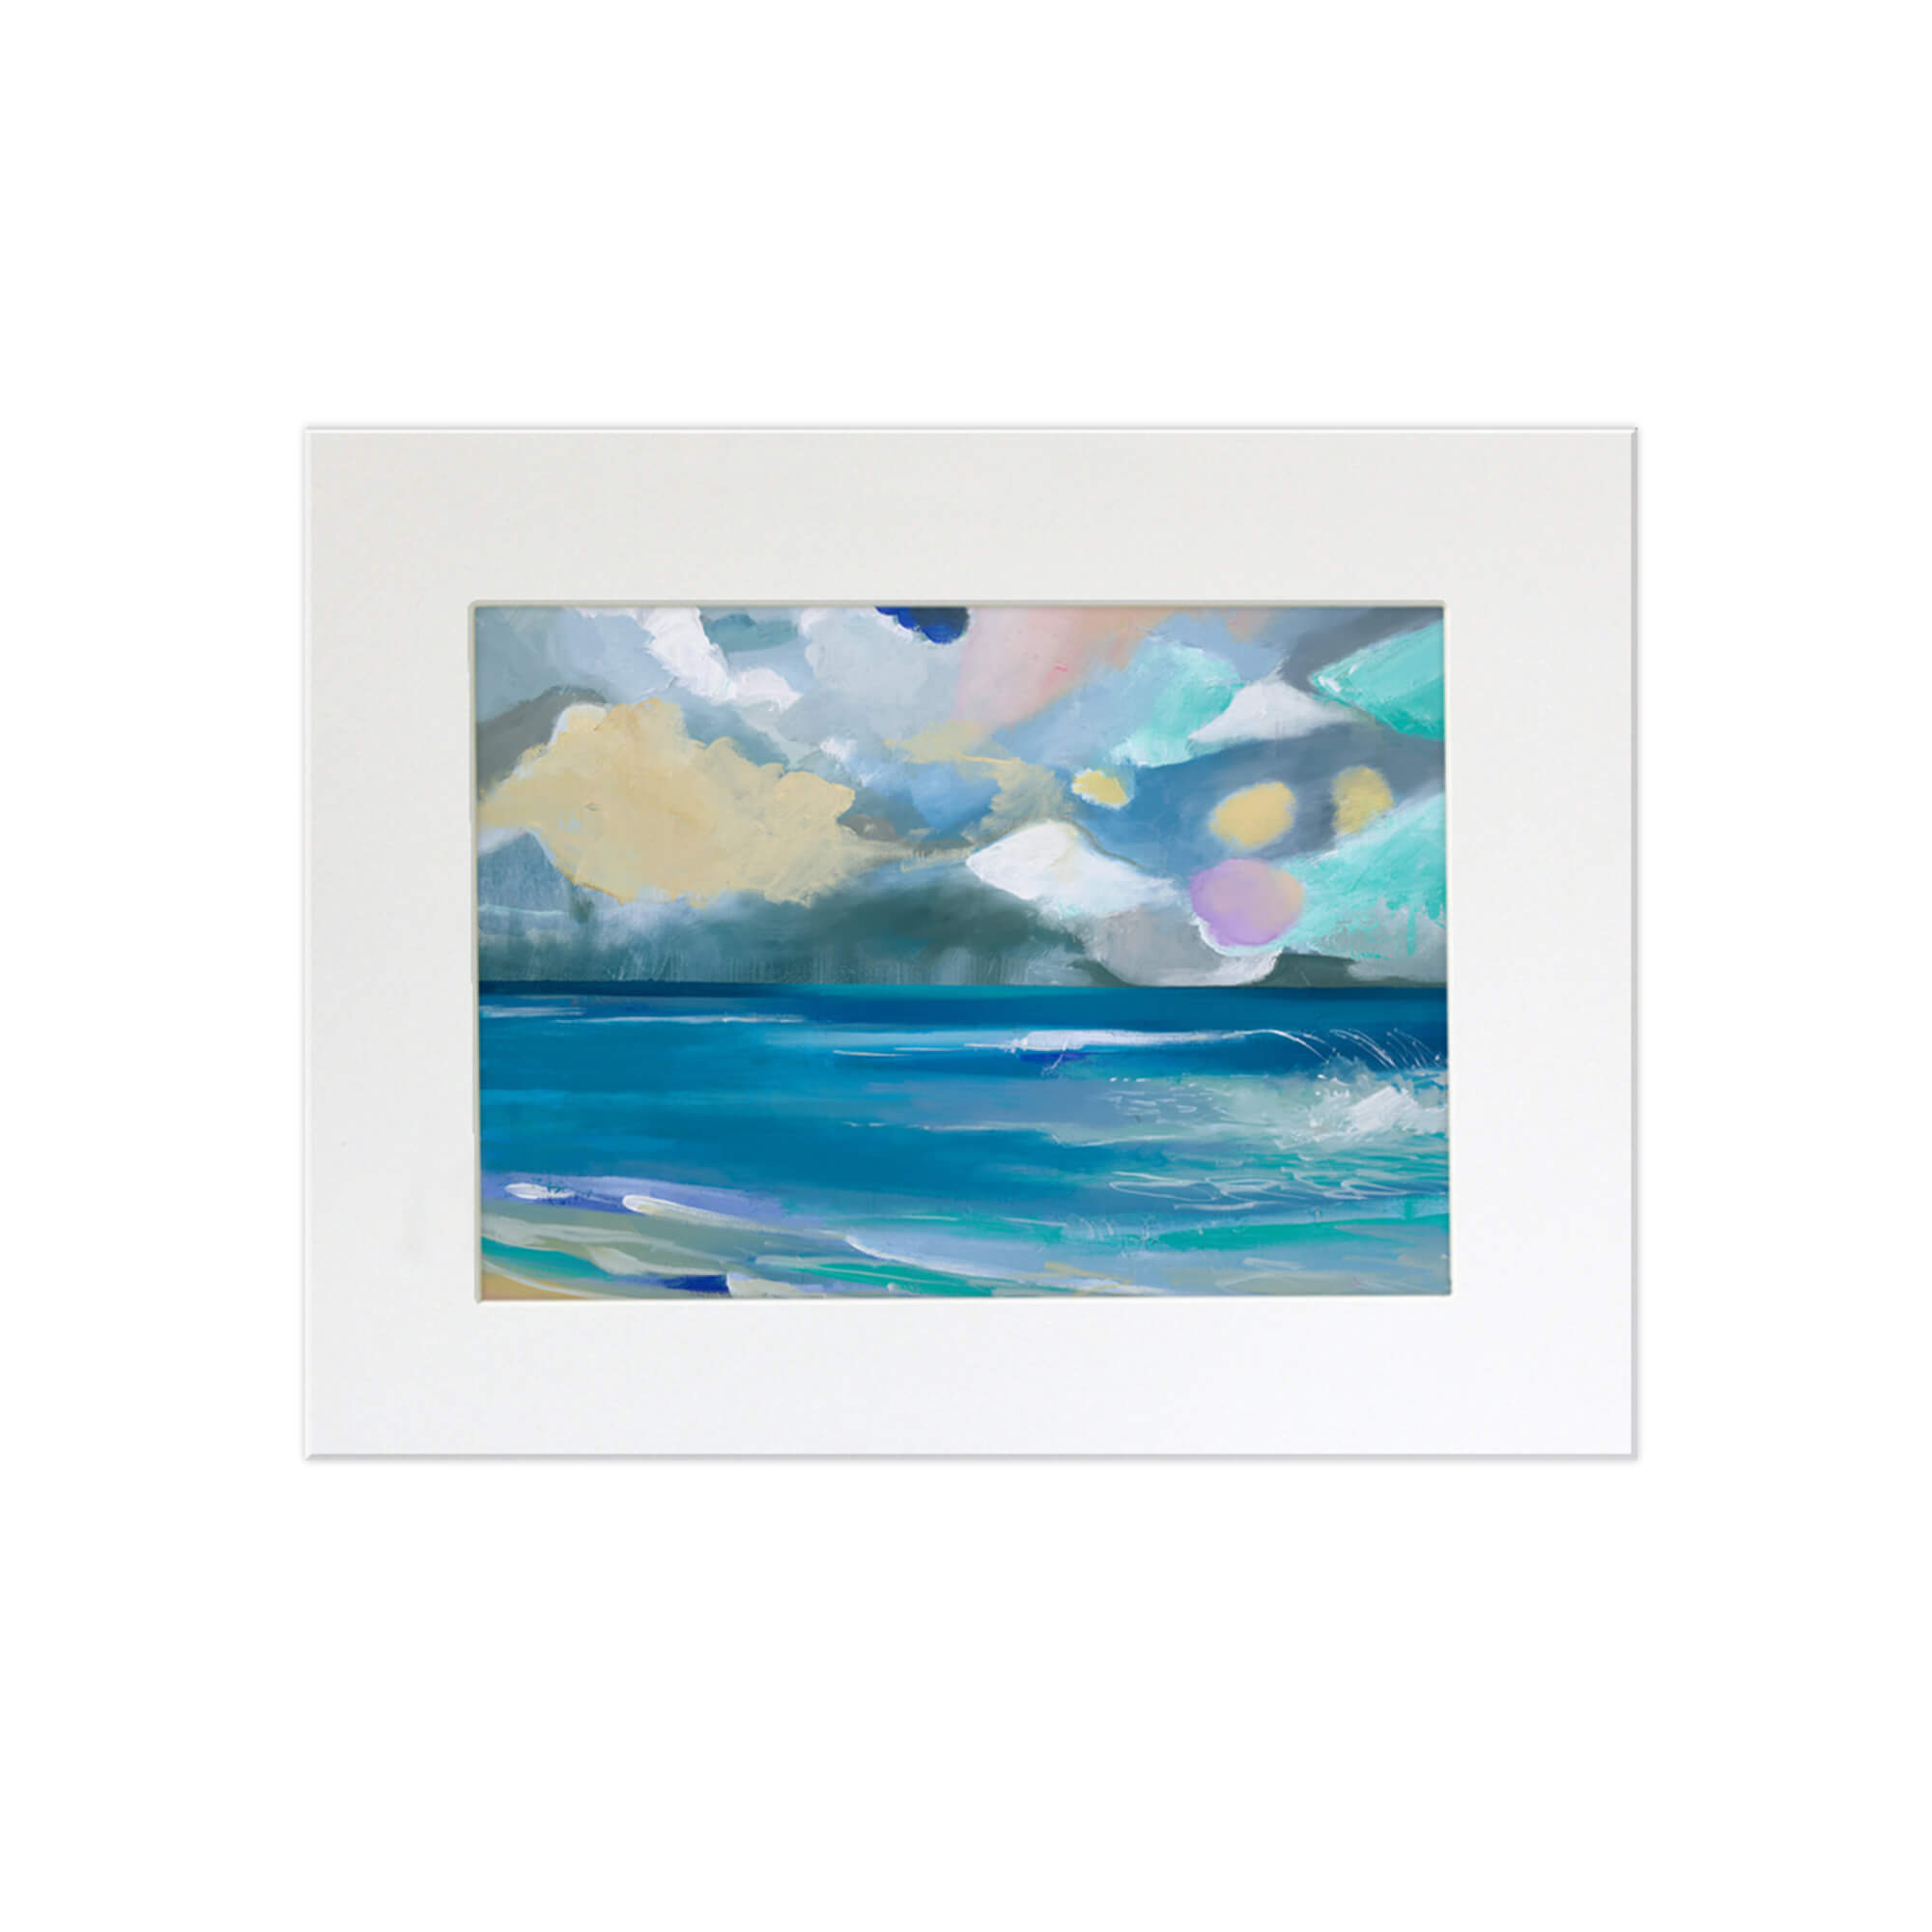 A matted art print of a serene seascape by Hawaii artist Saumolia  Puapuaga